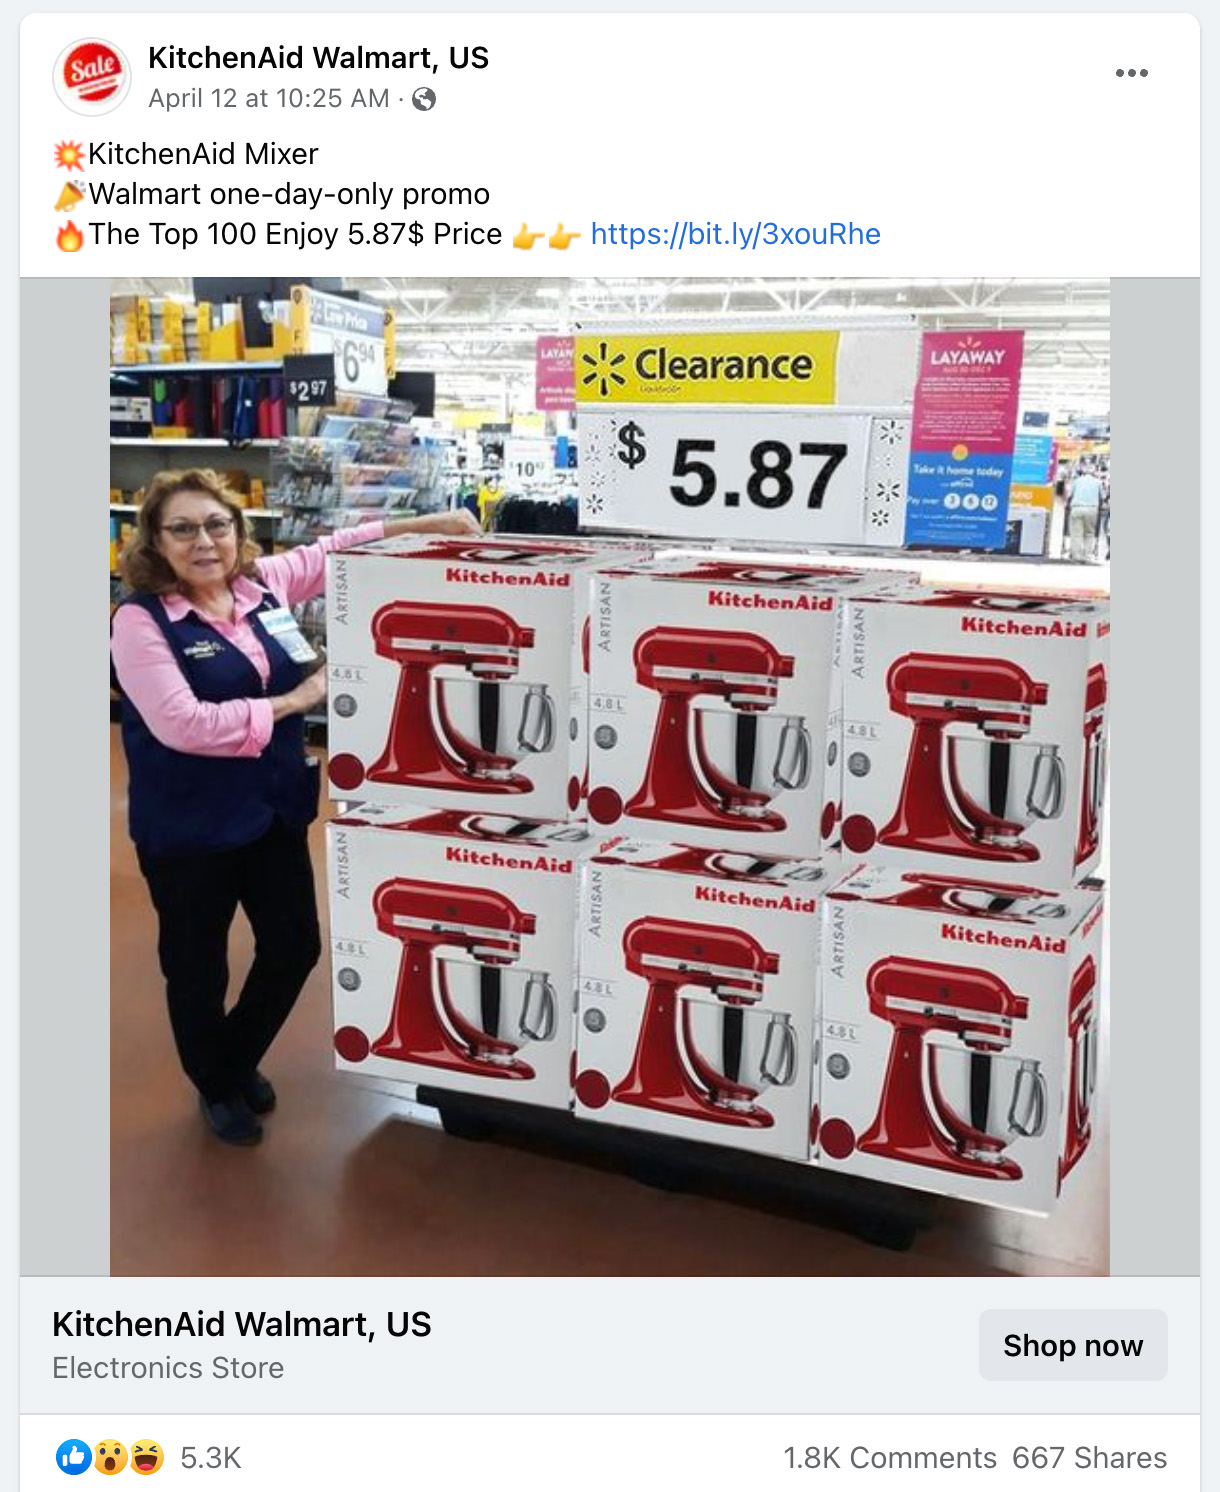 Walmart ไม่ได้แจกเครื่องผสมอาหาร KitchenAid ที่เหลือบน Facebook และไม่ได้ยุติการเป็นหุ้นส่วนกับยักษ์ใหญ่ด้านเครื่องใช้ในครัว